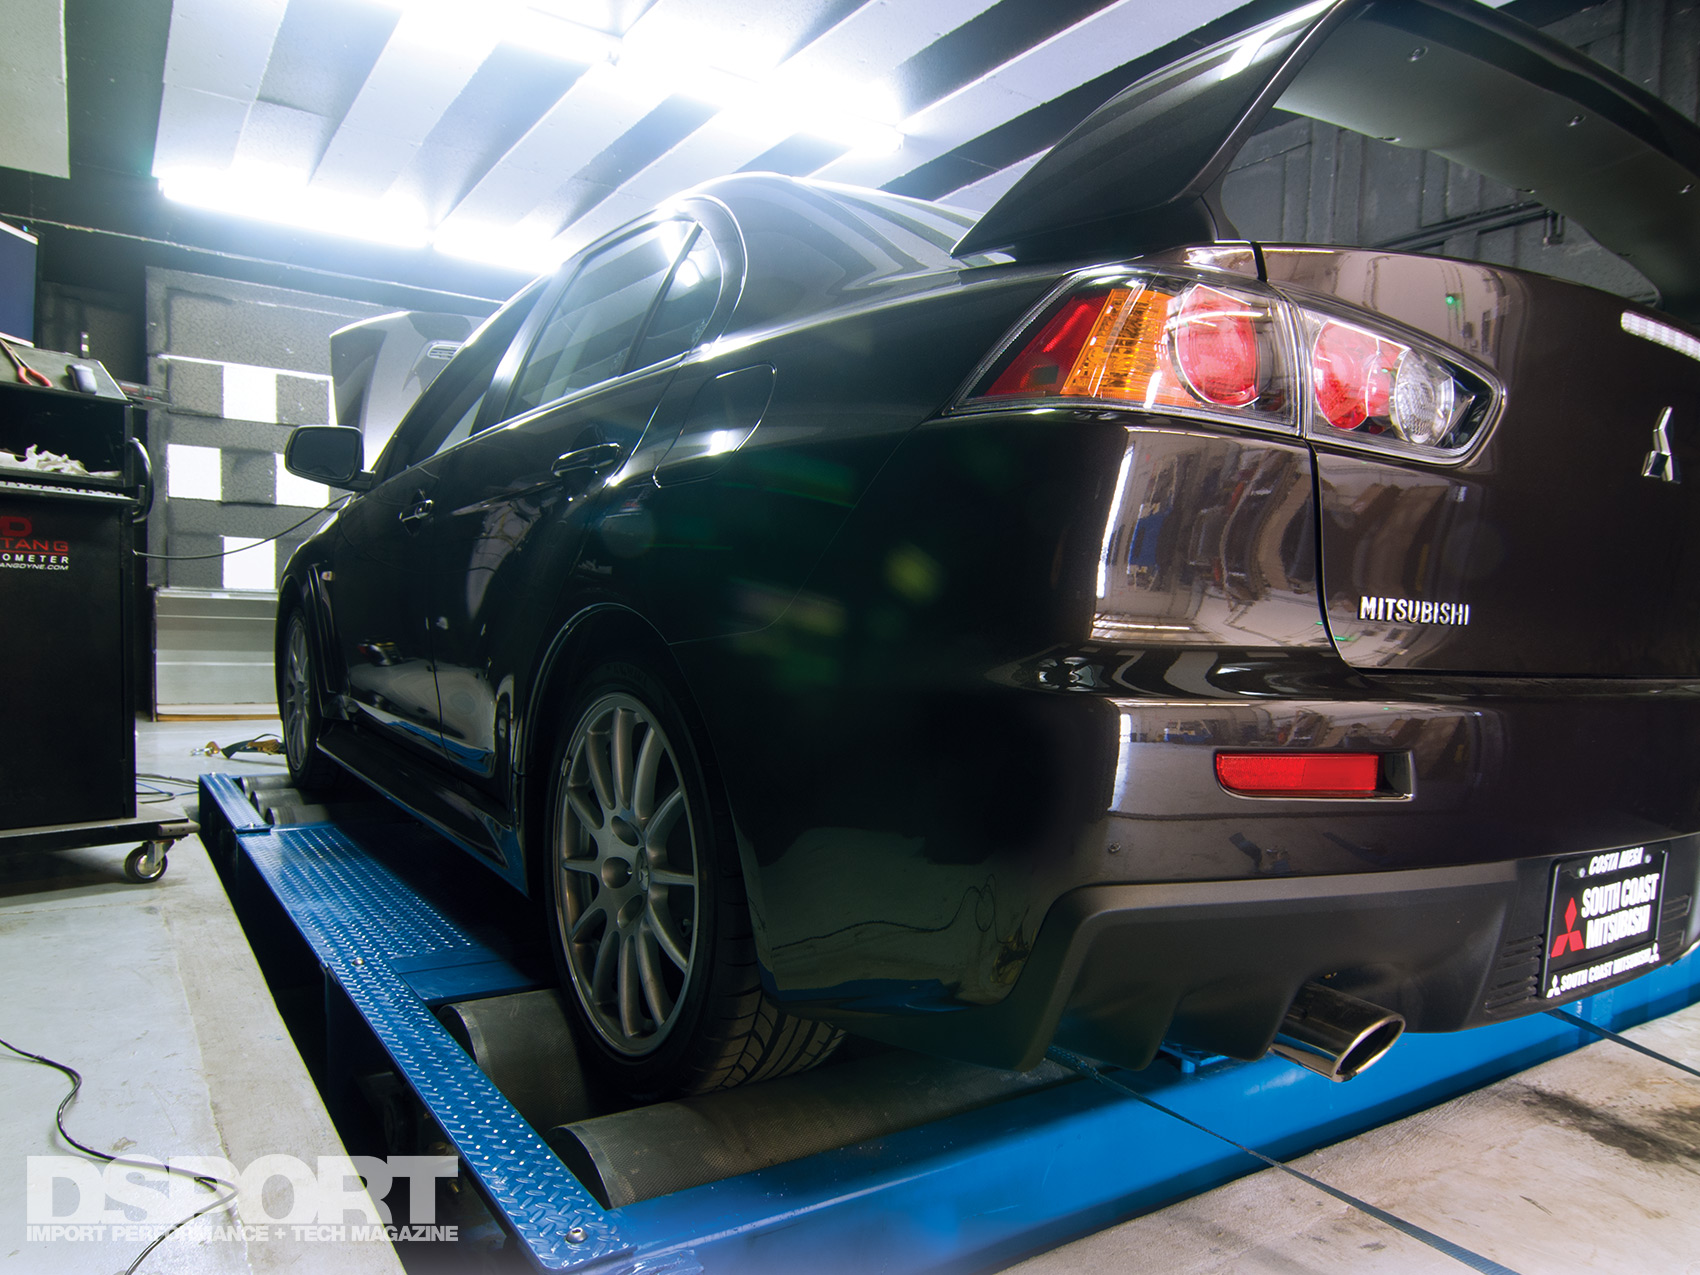 Test & Tune: 2011 Mitsubishi EVO X GSR | Big Power Gains for the 4B11